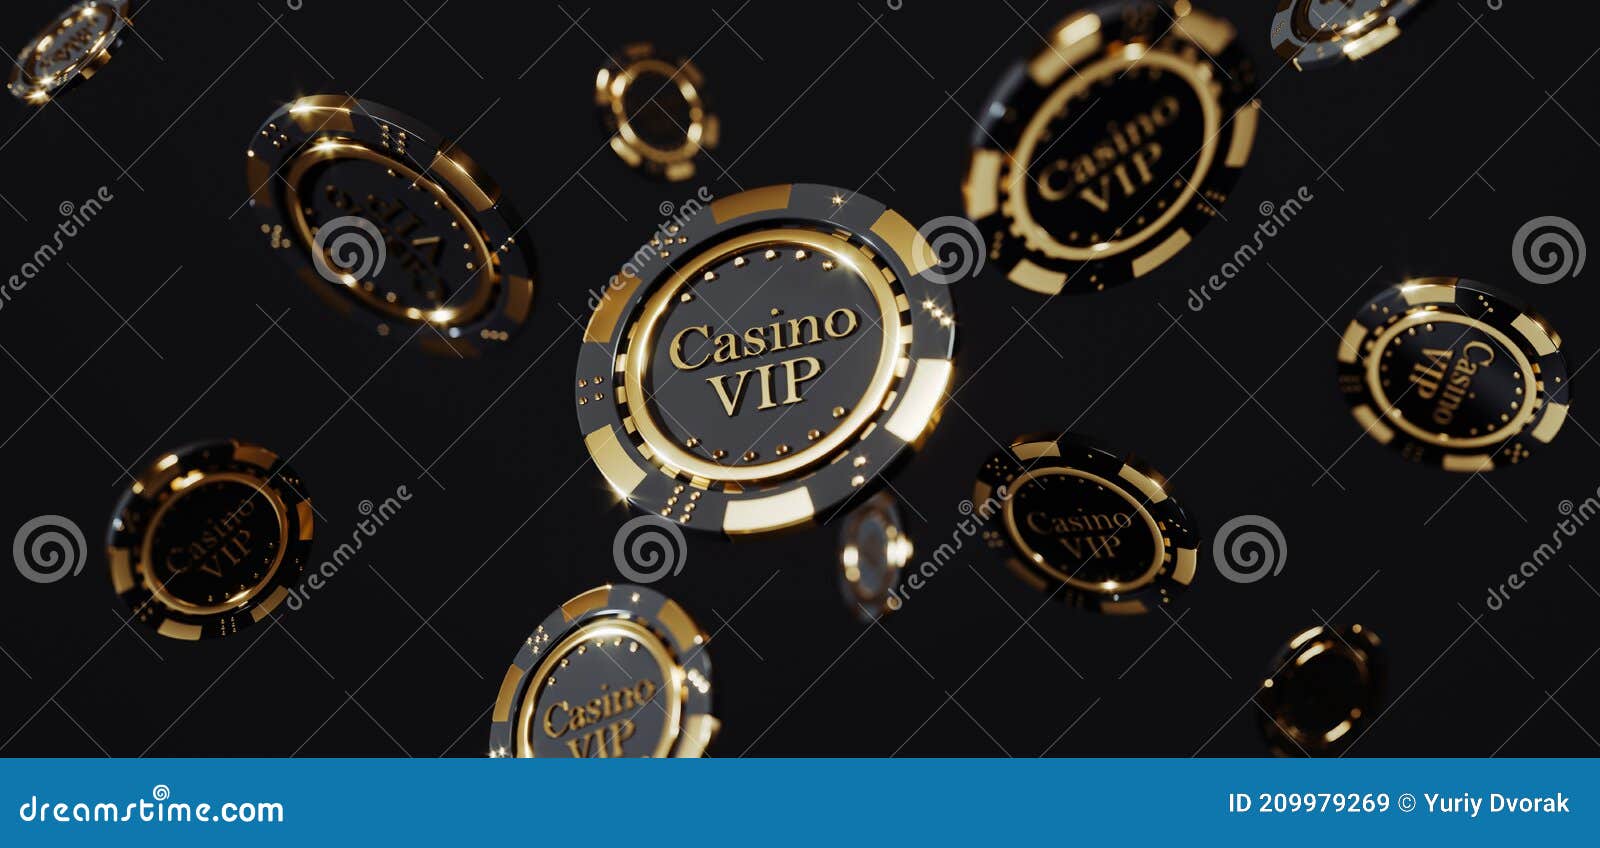 Casino Chips on Black Background. Casino Game Golden 3D Chips. Online Casino  Background Banner or Casino Logo Stock Illustration - Illustration of dice,  gamble: 209979269